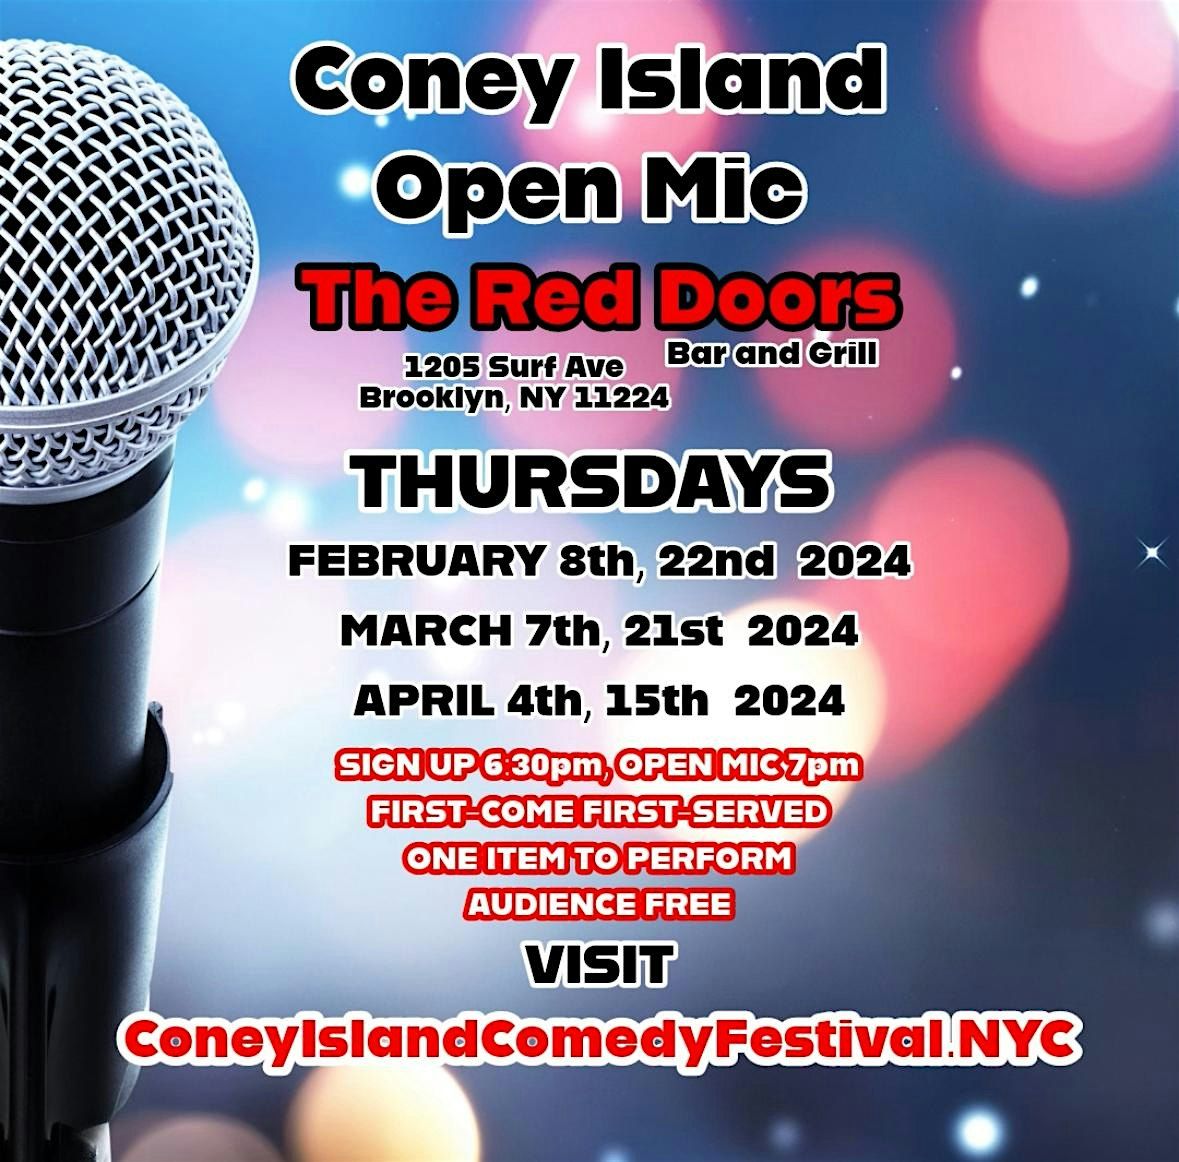 Coney Island Open Mic series